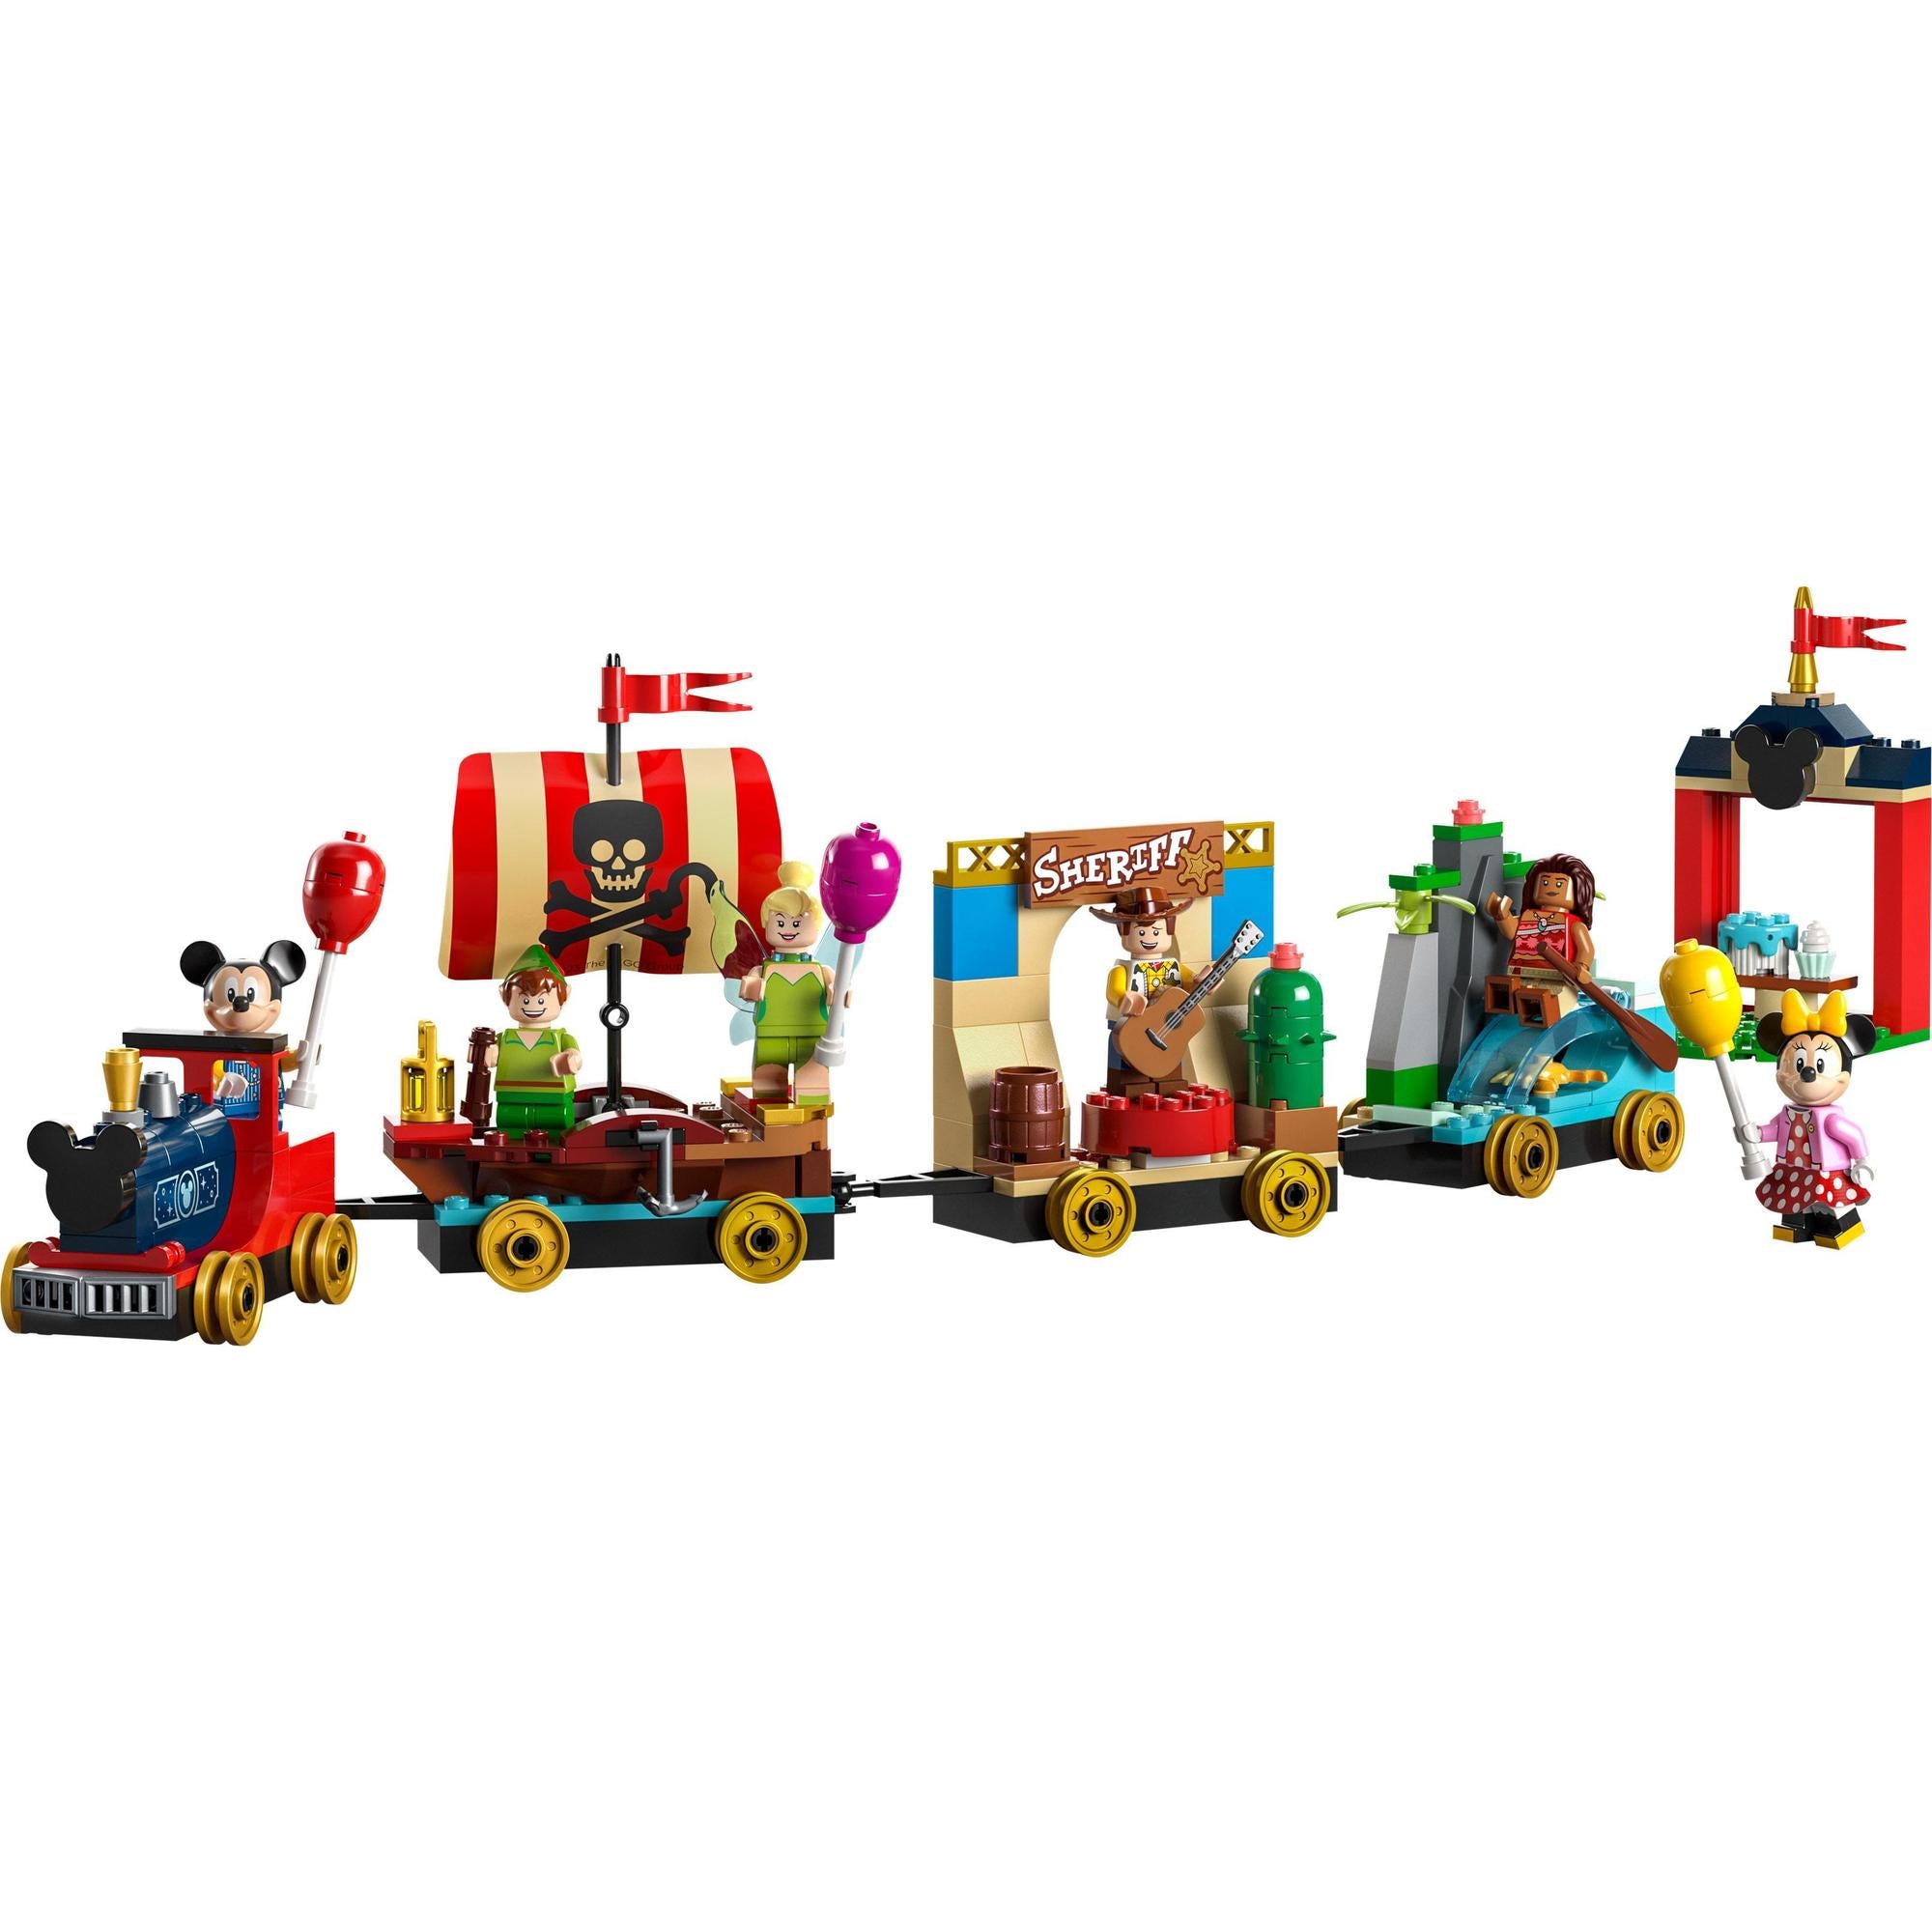 LEGO® | 43212 | Disney Geburtstagszug